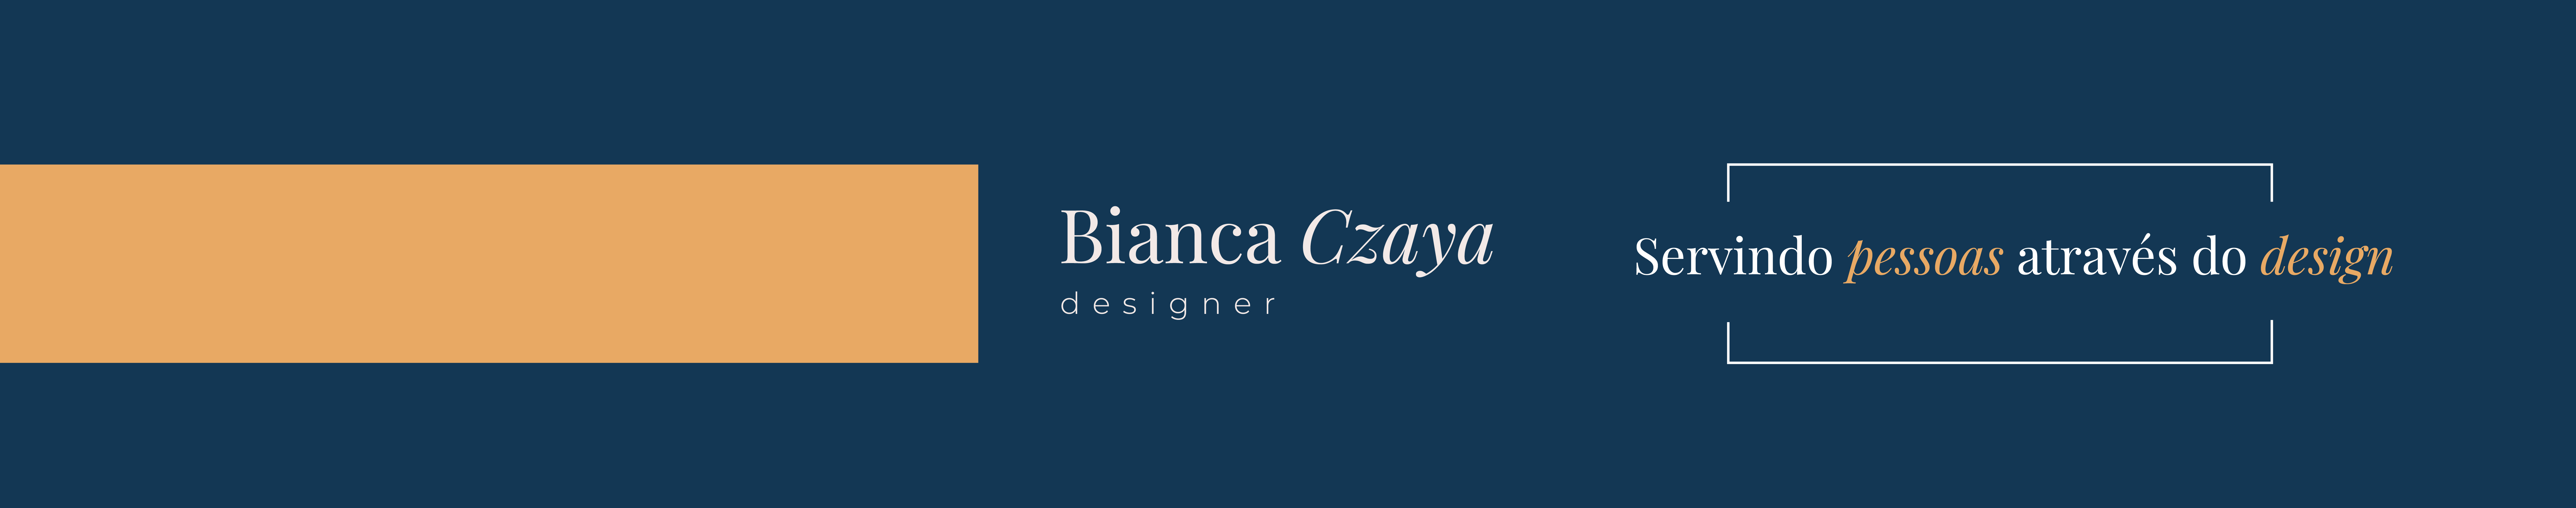 Bianca Czayas profilbanner